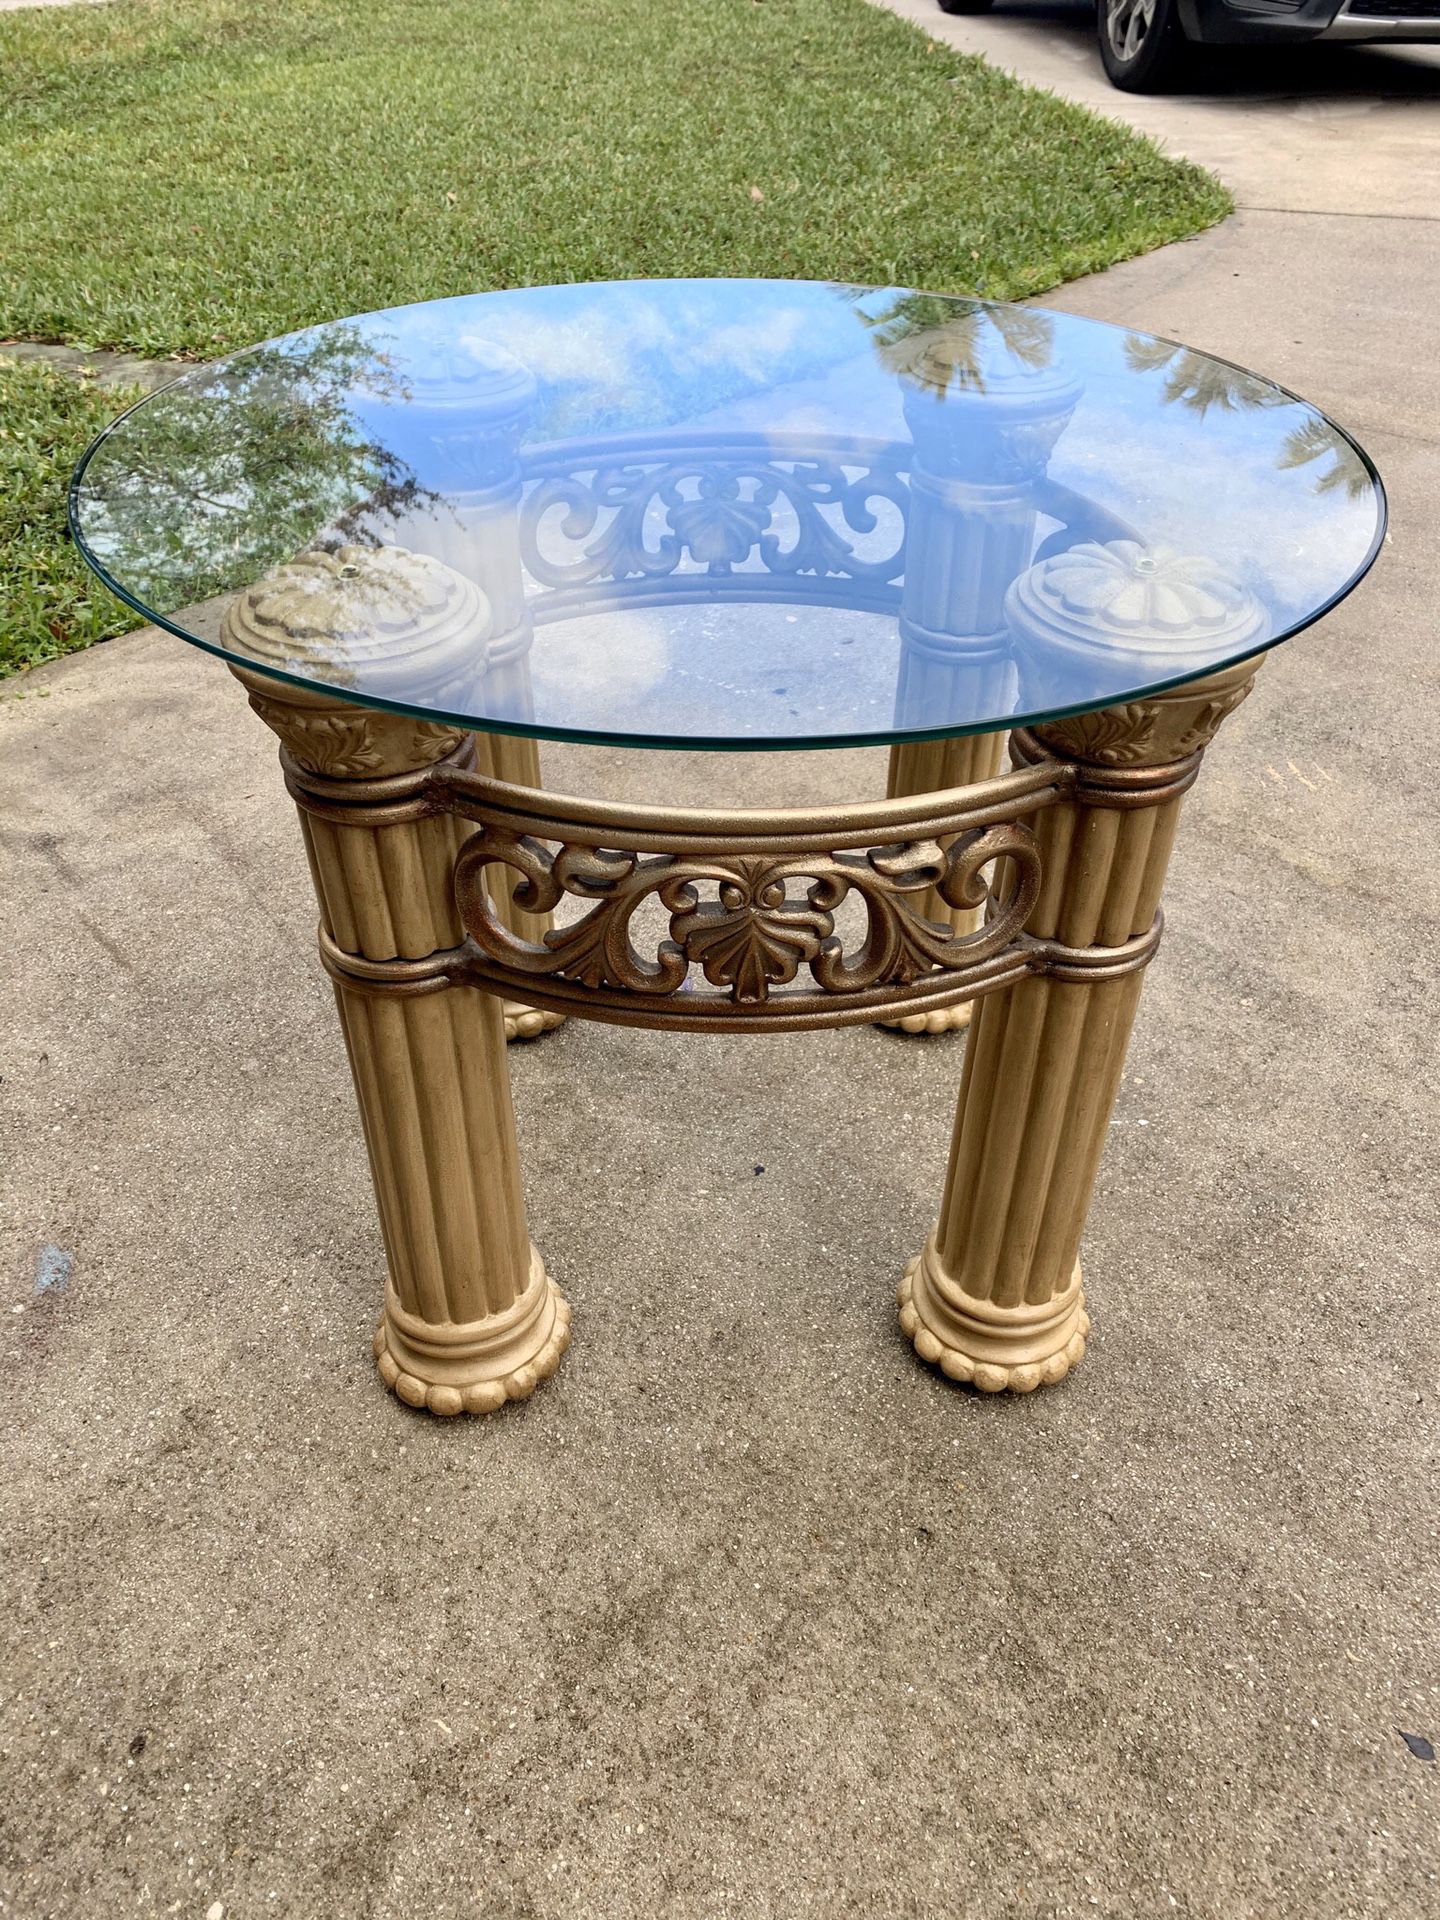 Gorgeous pillar column side or coffee table w/ glass top 30x20” high